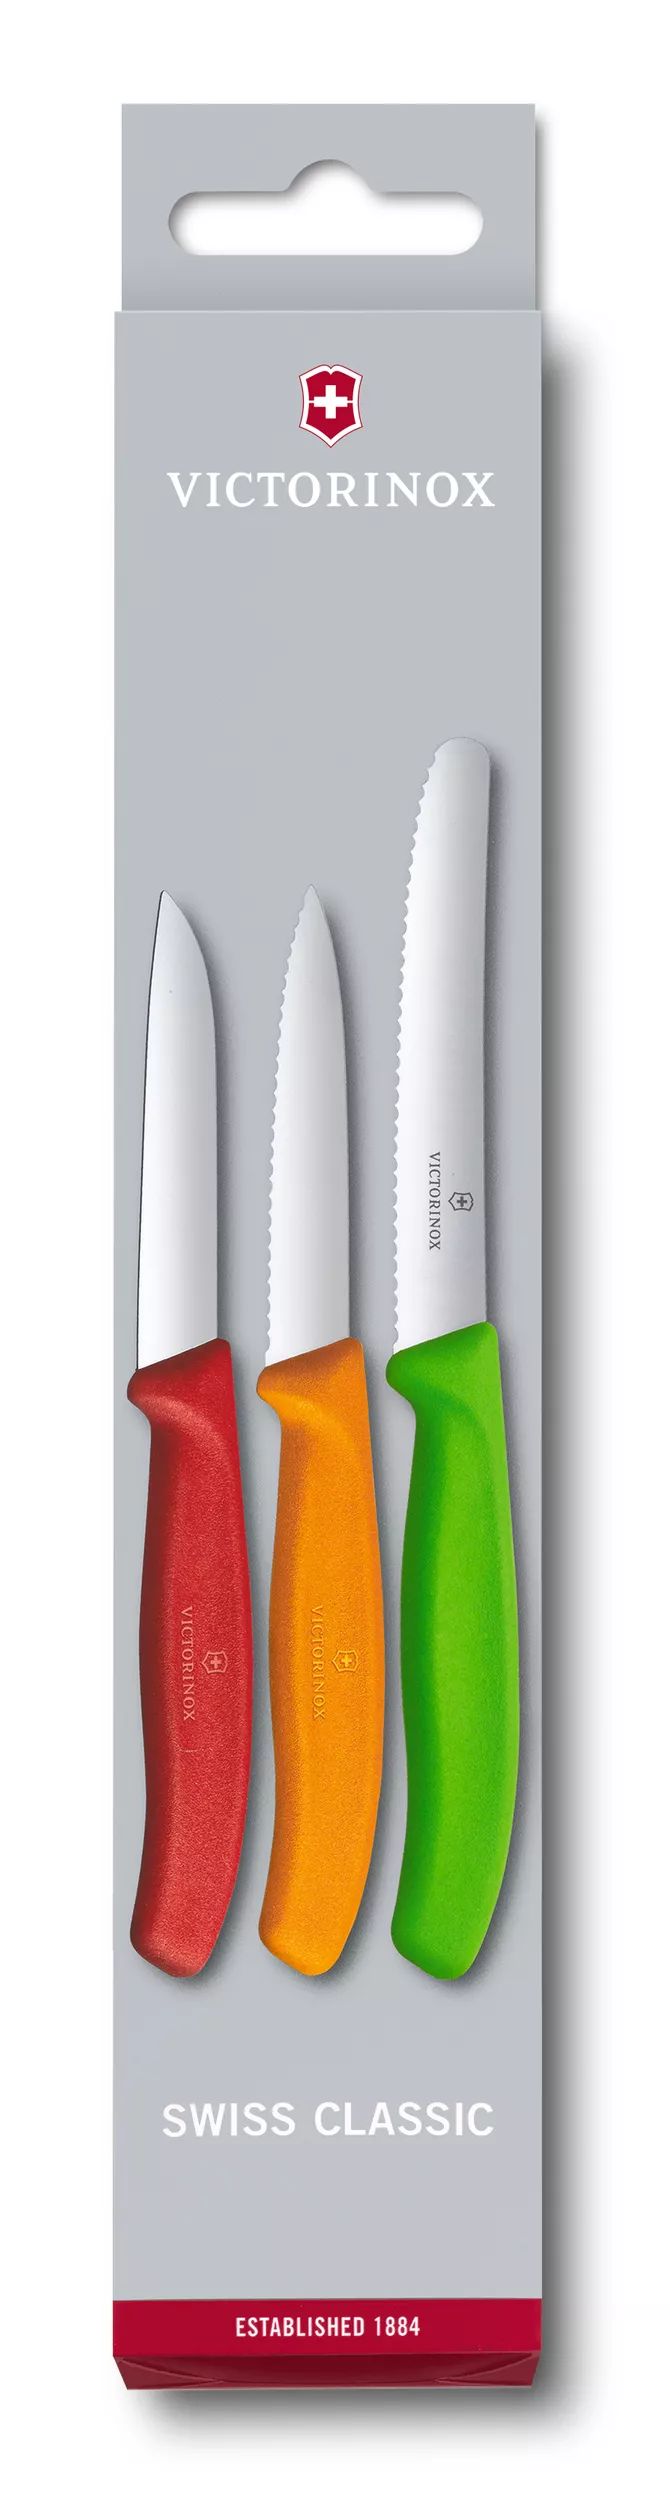 Set de cuchillos mondadores Swiss Classic, 3 piezas-6.7116.32